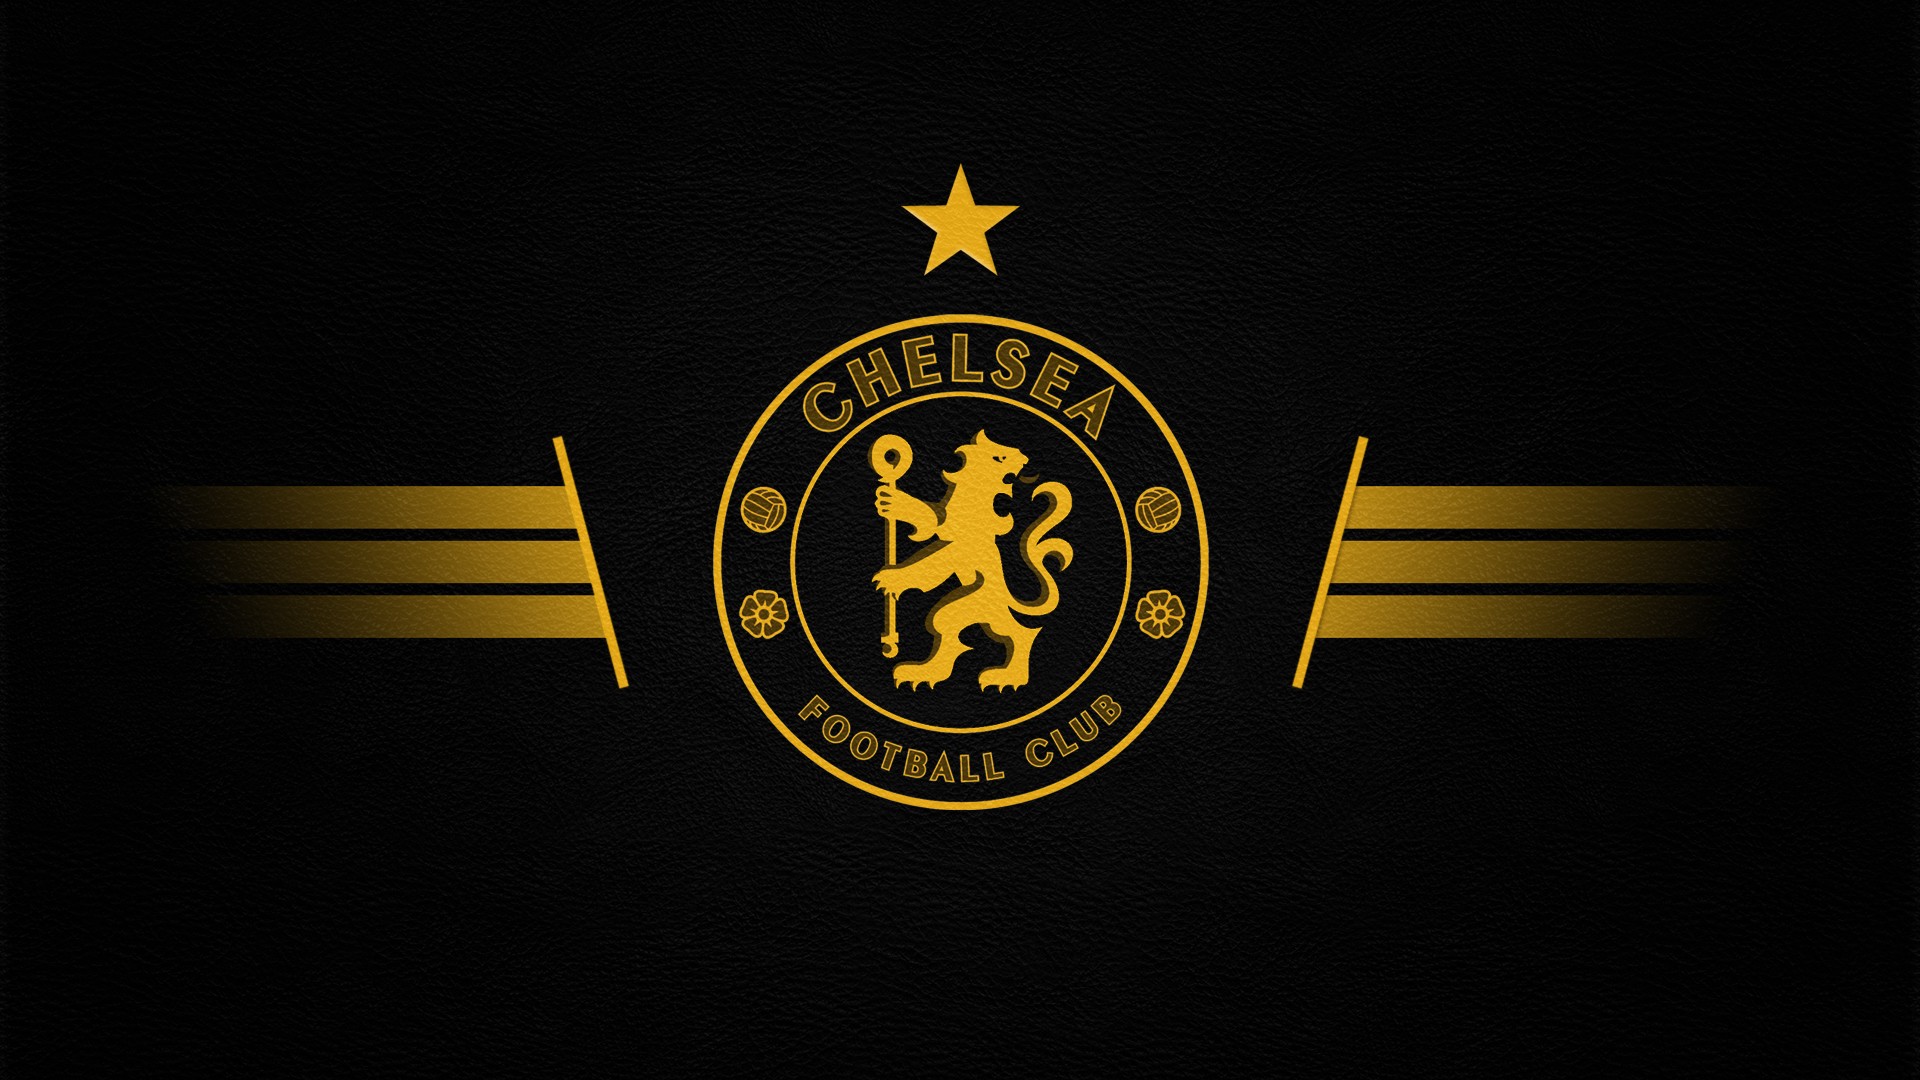 General 1920x1080 Chelsea FC soccer soccer clubs Premier League logo England sport black background simple background